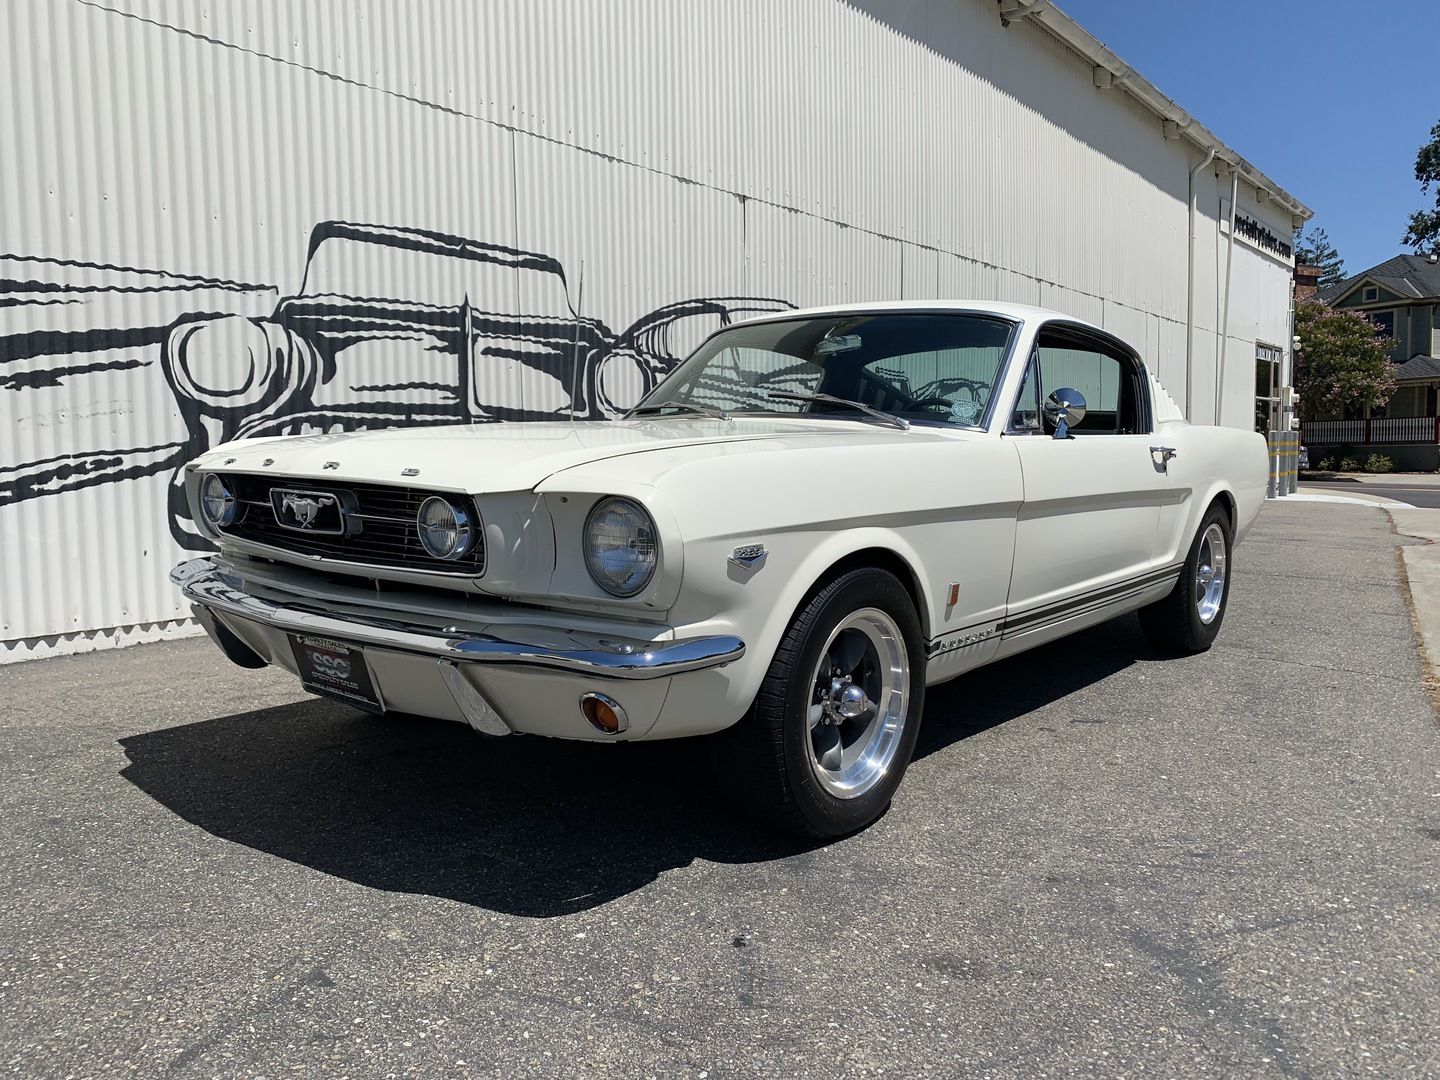 '66 Mustang